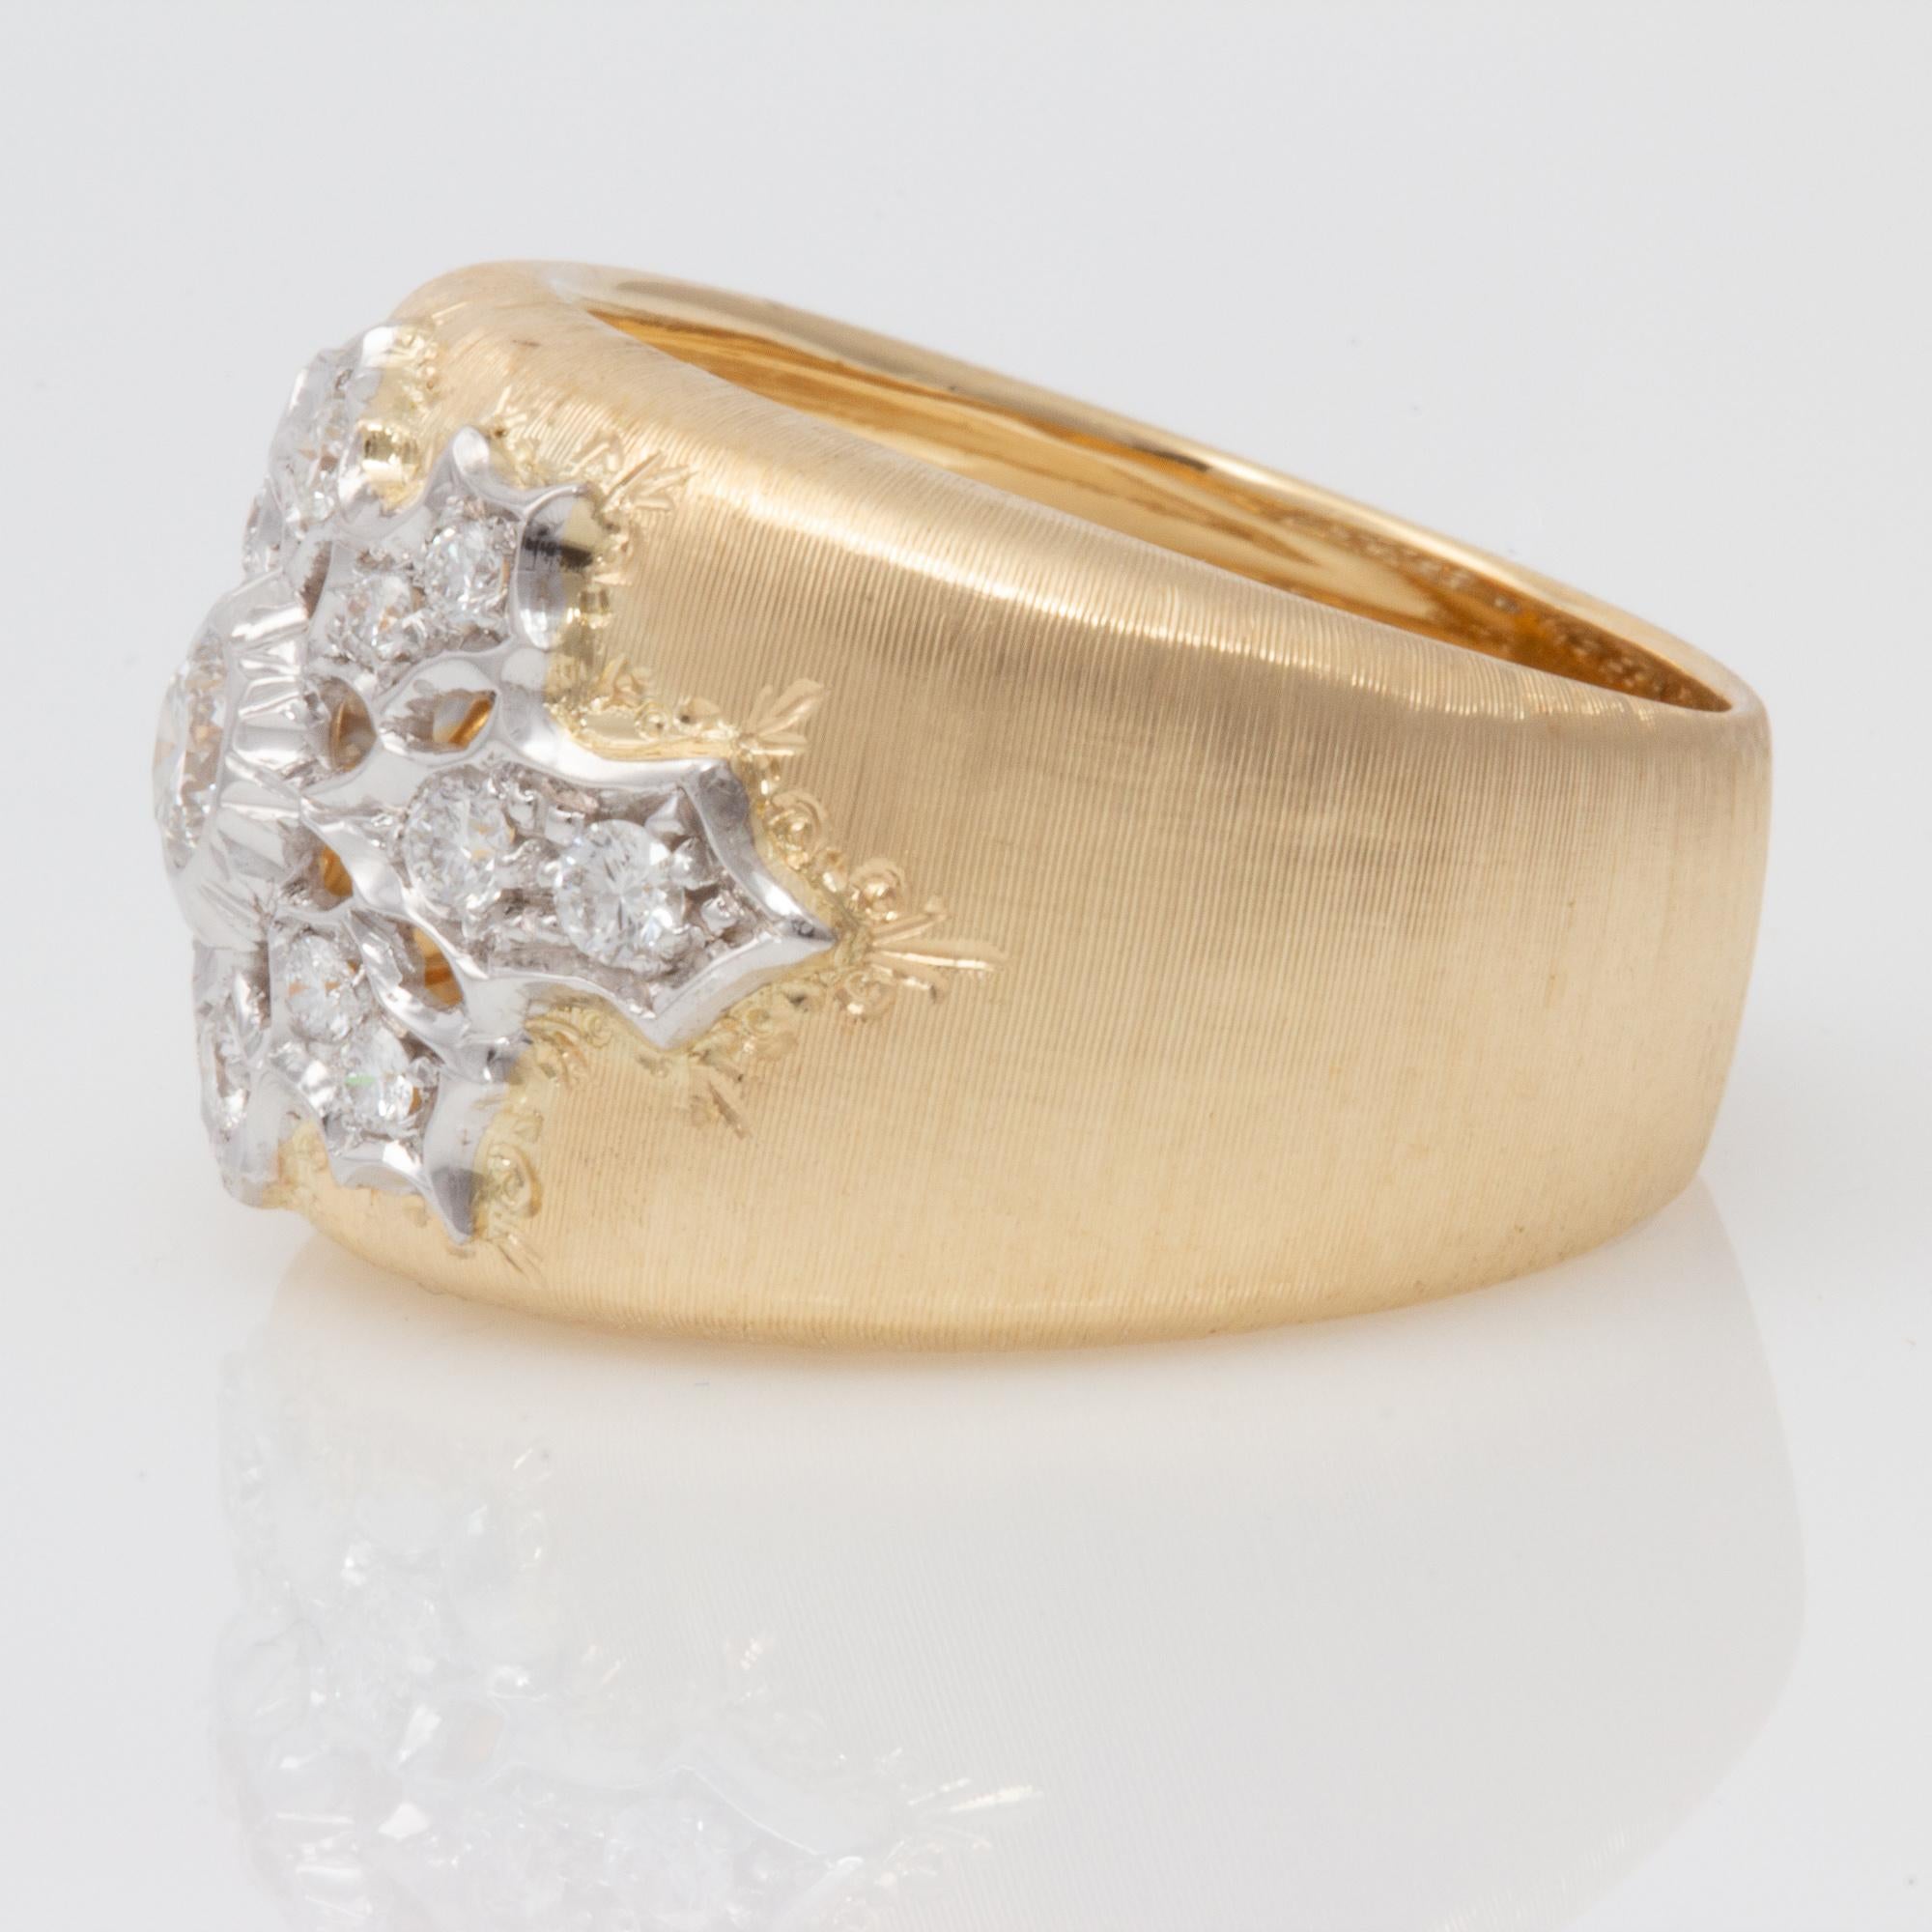 Artisan Florentine Engraved Two-Toned 18 Karat Italian Diamond Ring